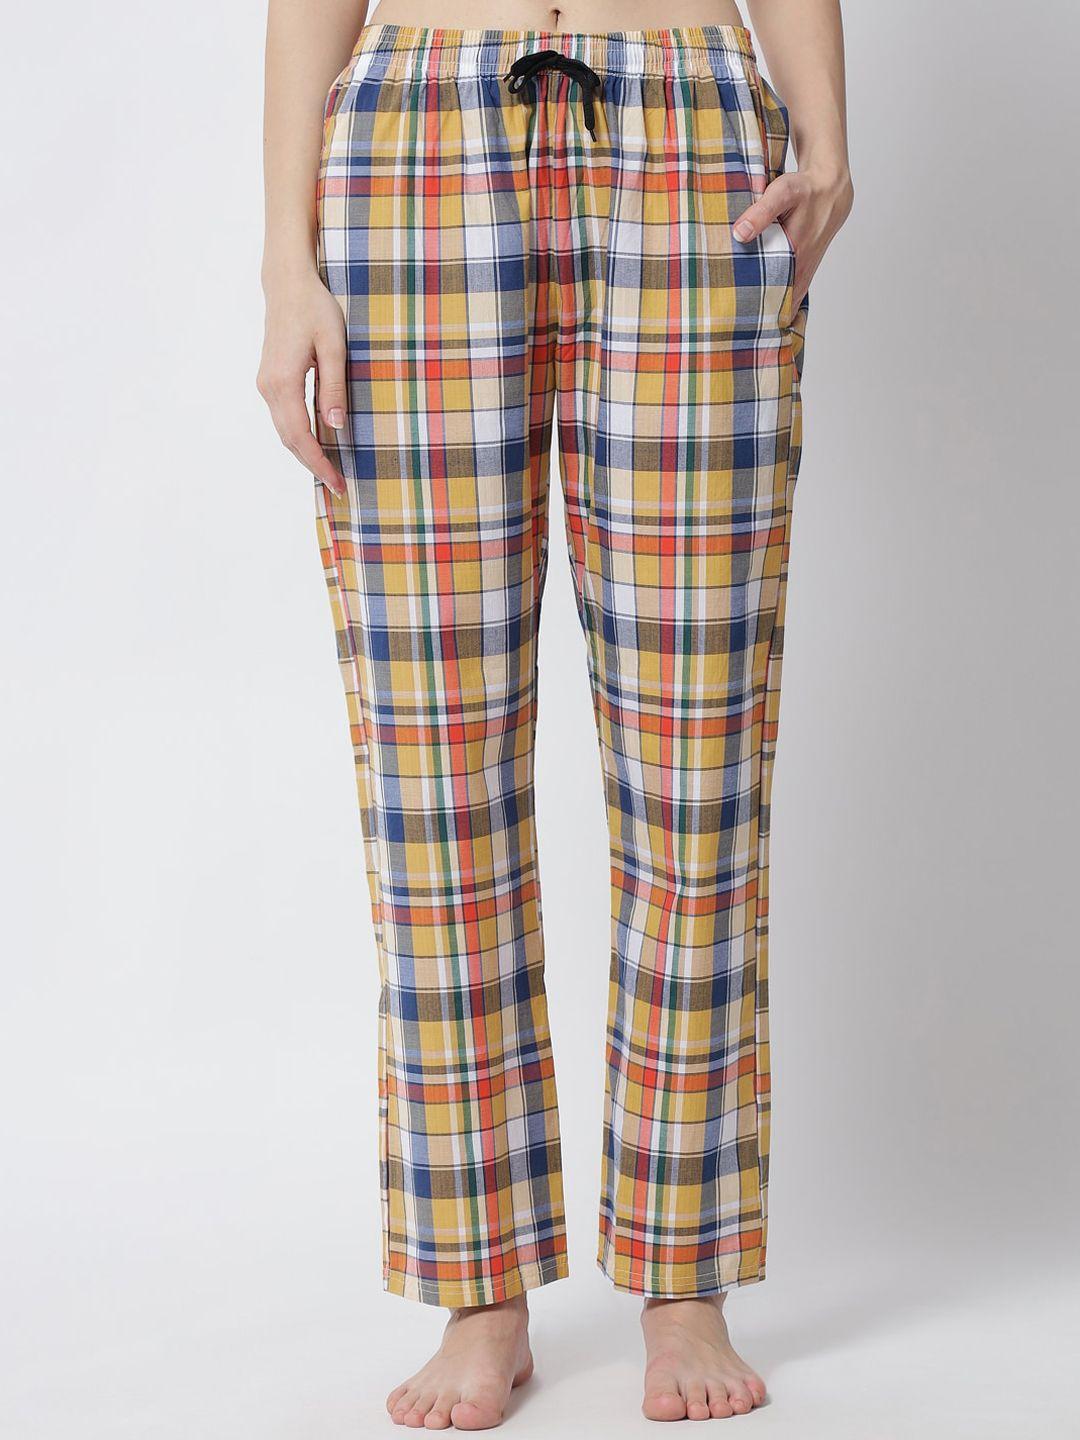 fflirtygo women multicolored checked cotton lounge pants